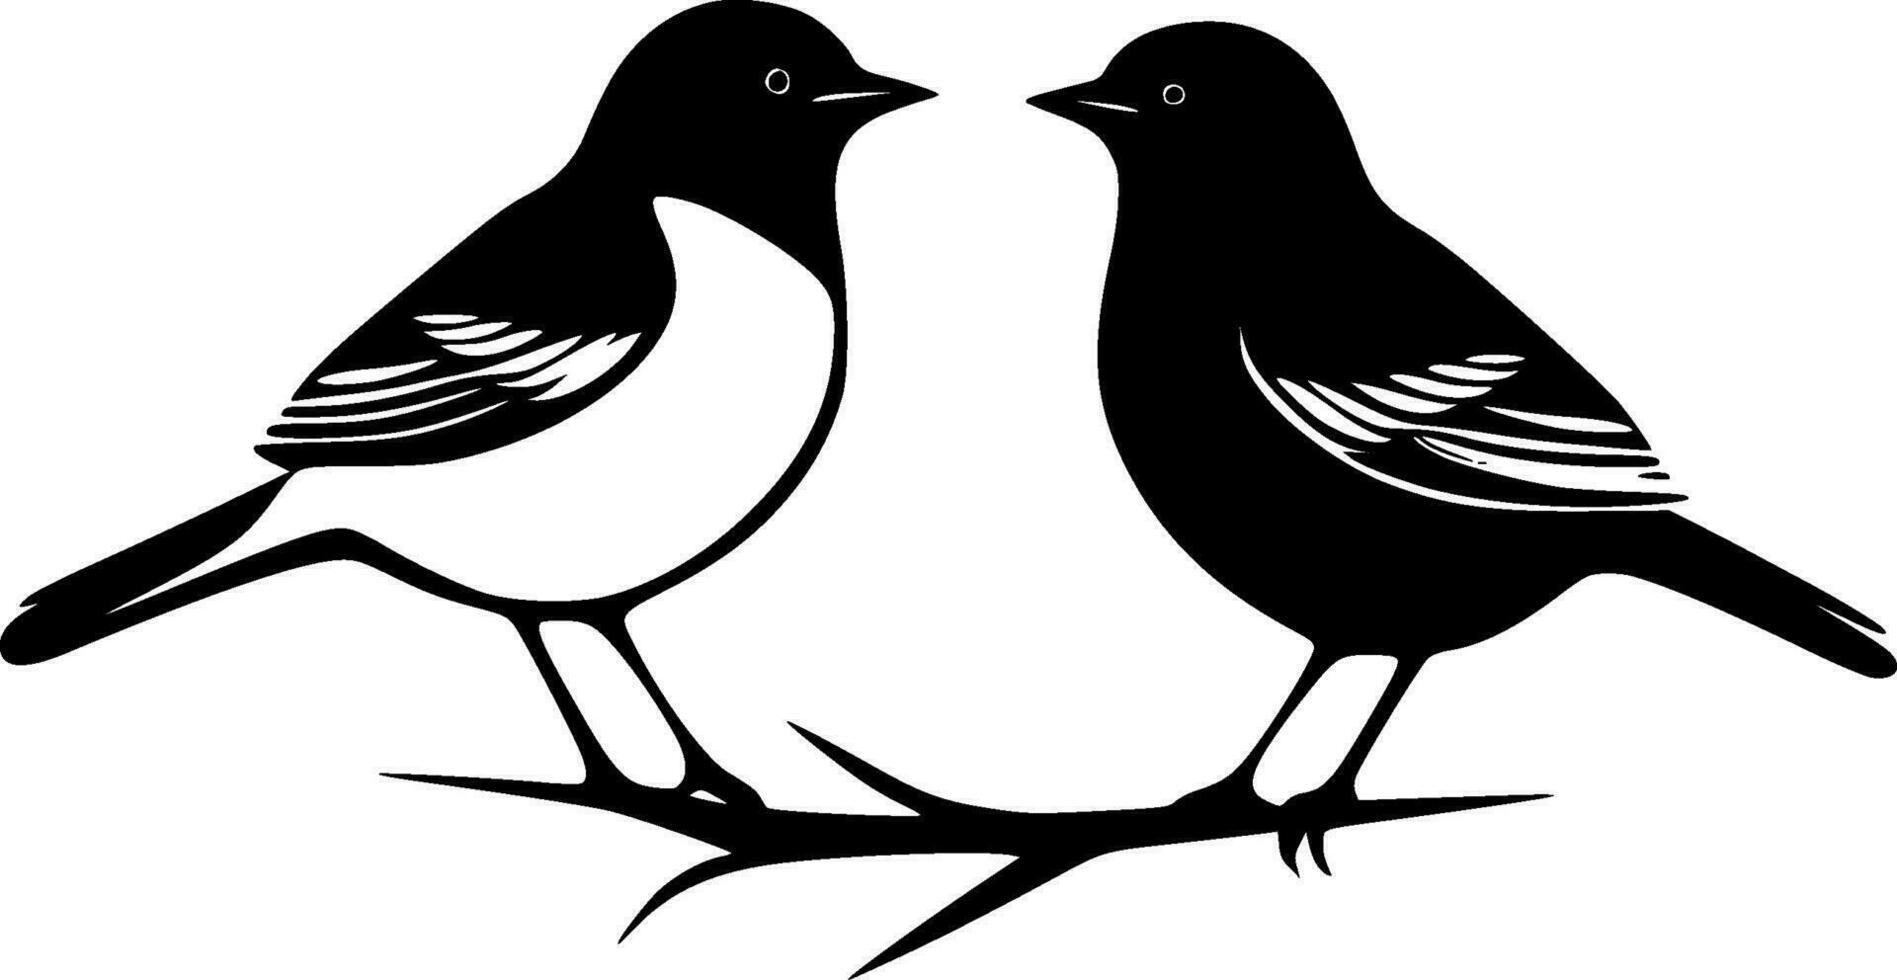 Birds, Minimalist and Simple Silhouette - Vector illustration